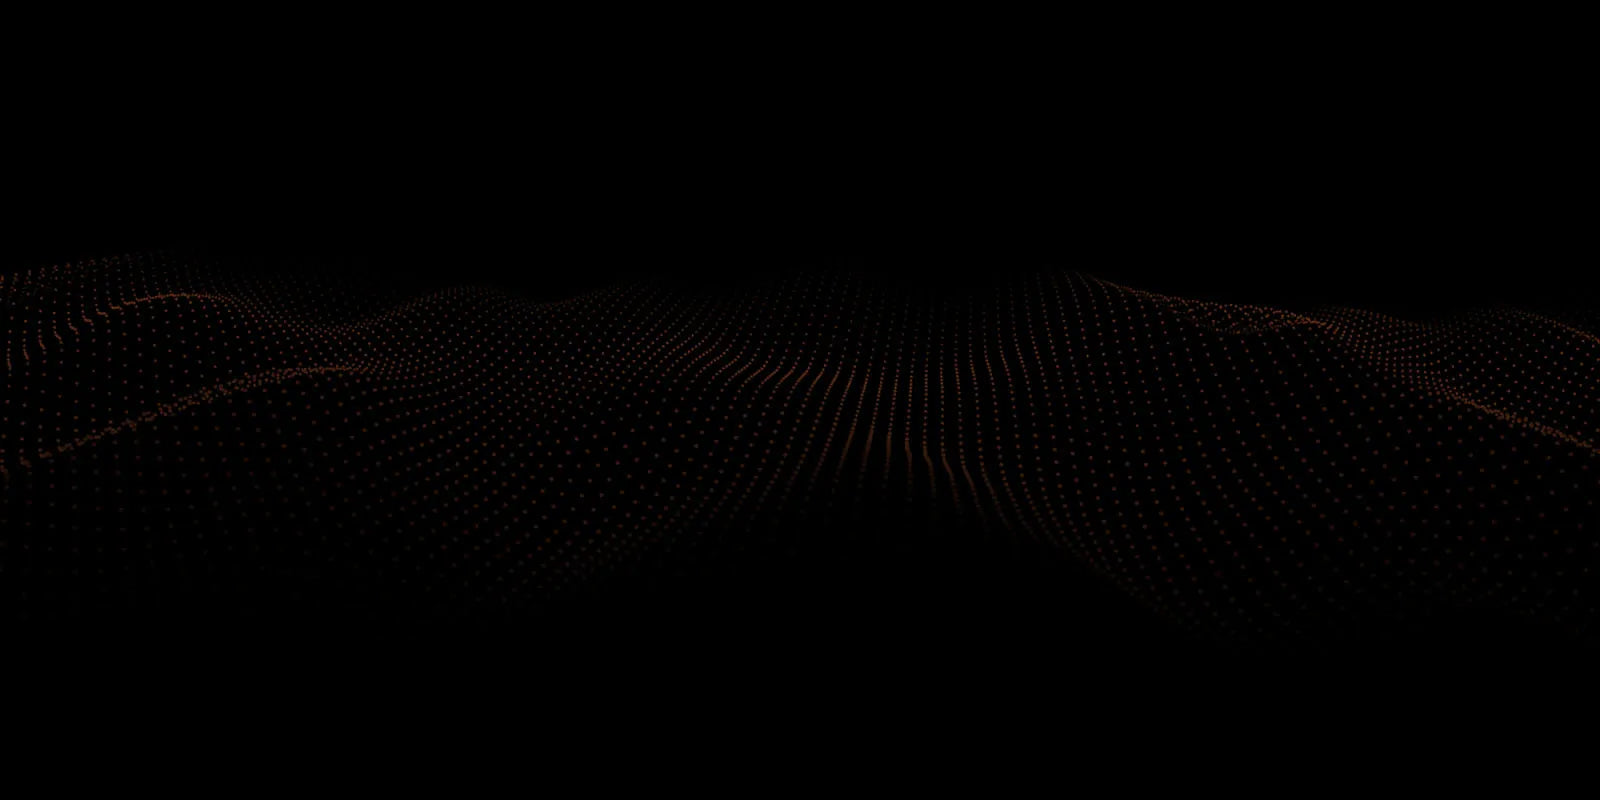 Graphic orange waves on black background